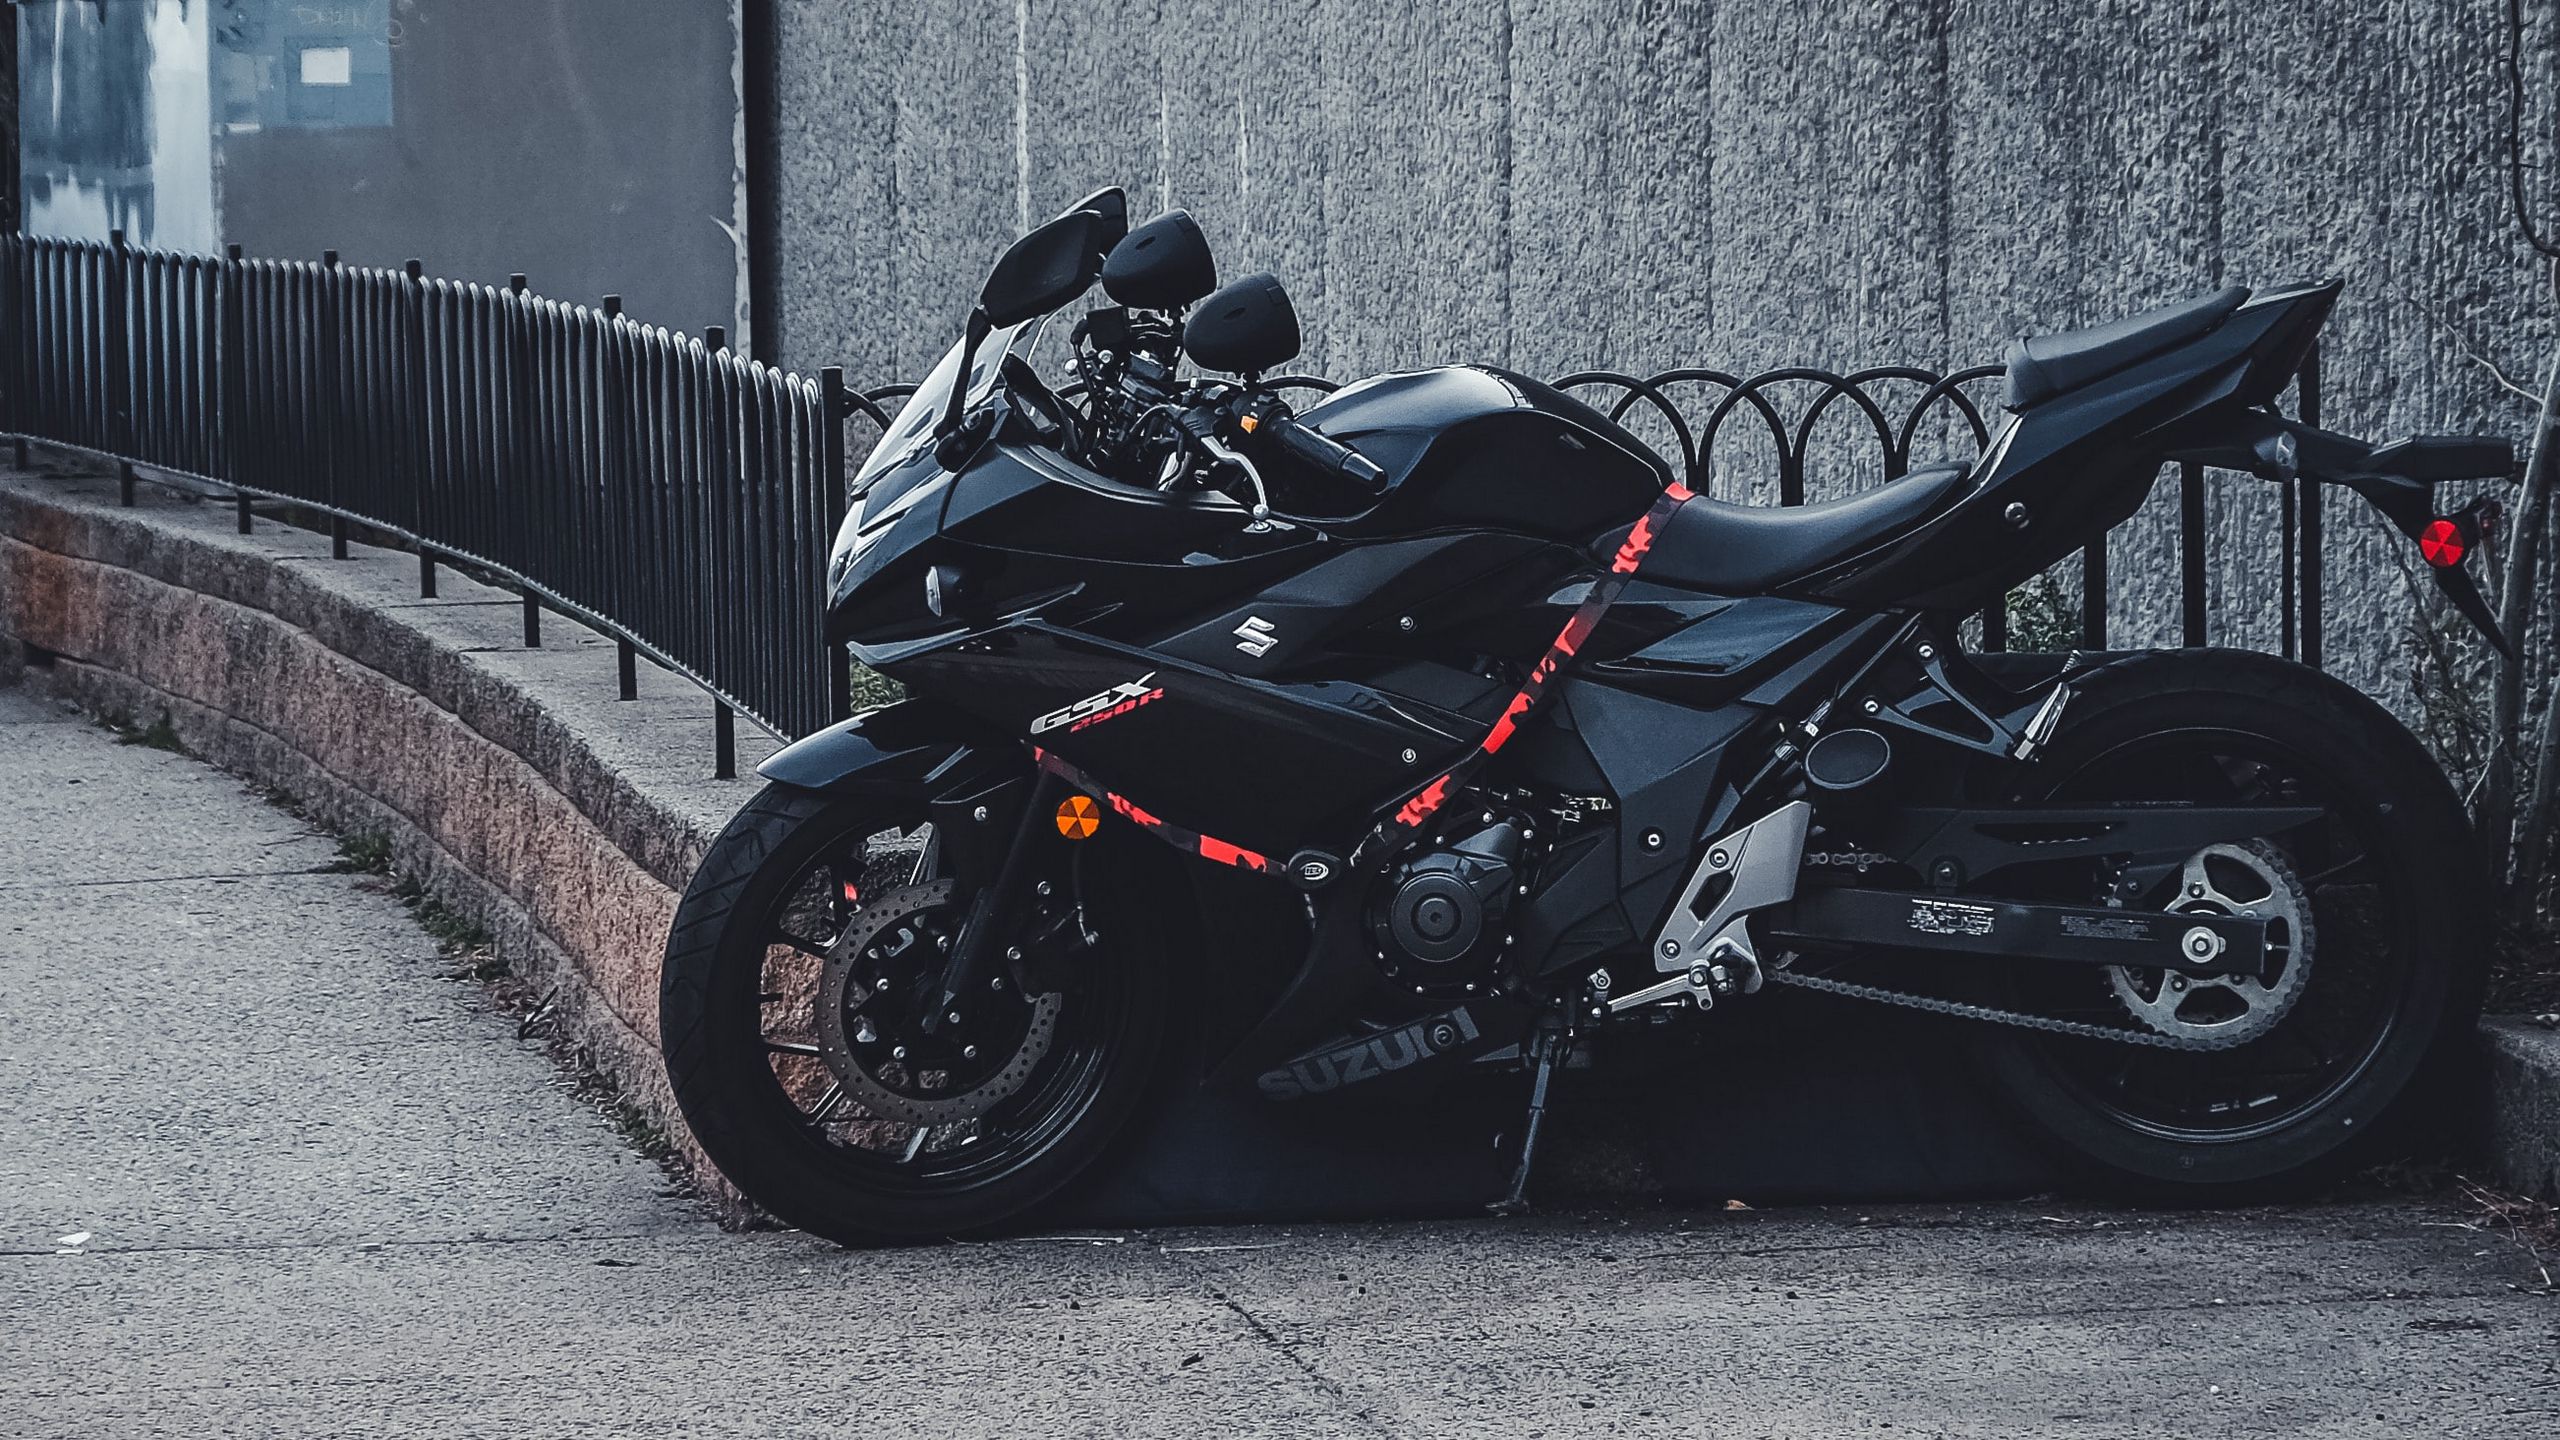 2560x1440 Wallpaper suzuki, motorcycle, bike, black, parking